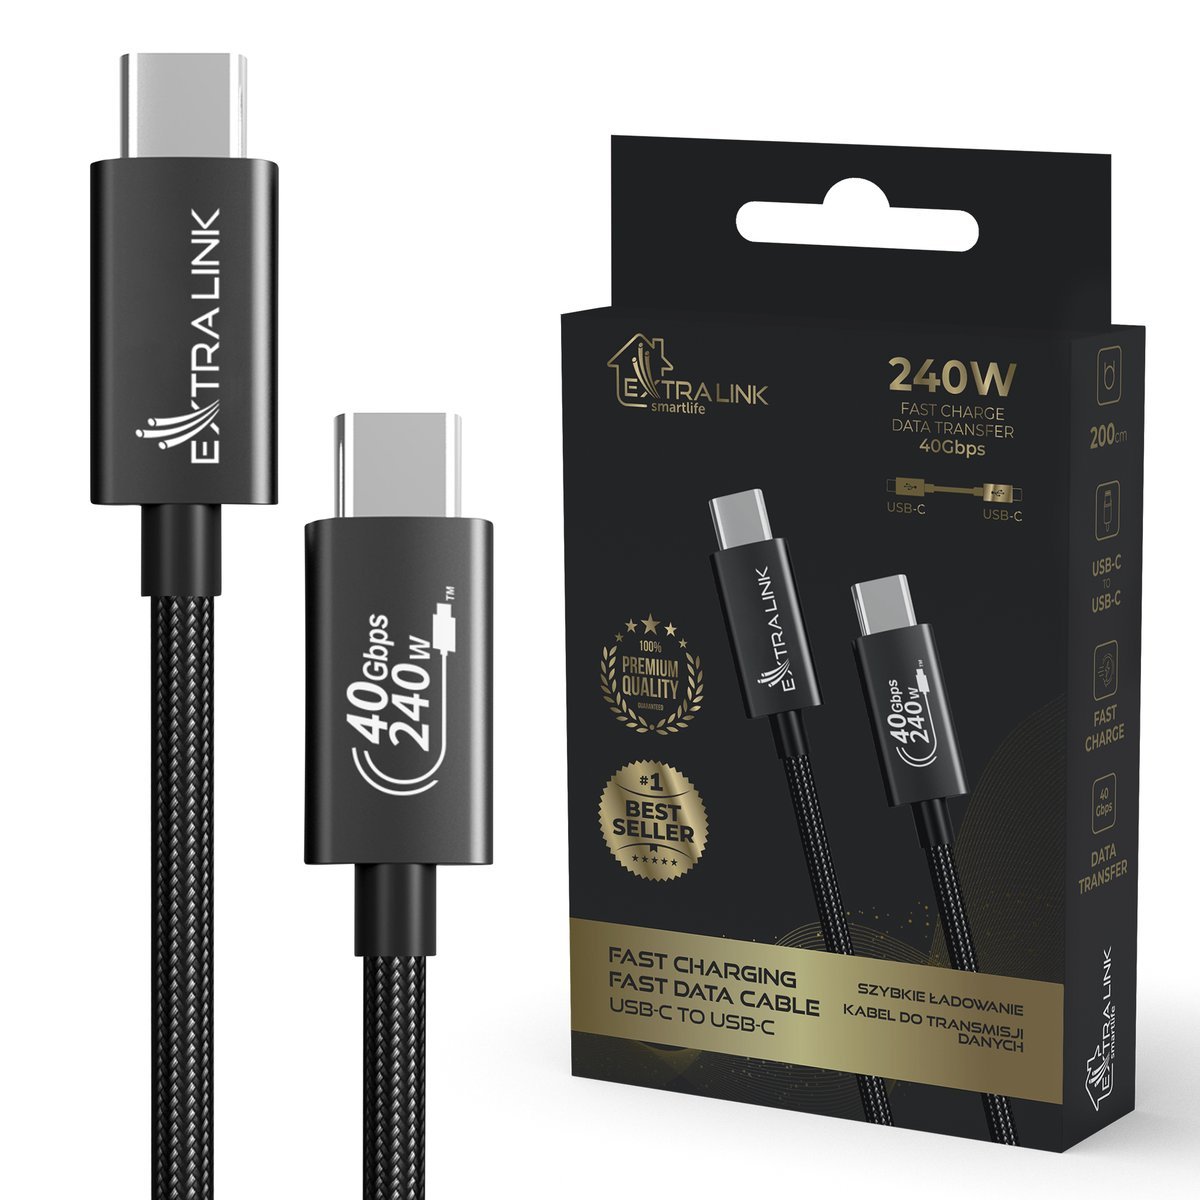 Kabel USB-C 240W 40Gbps 2m USB-C do USB C Extralink Smart Life